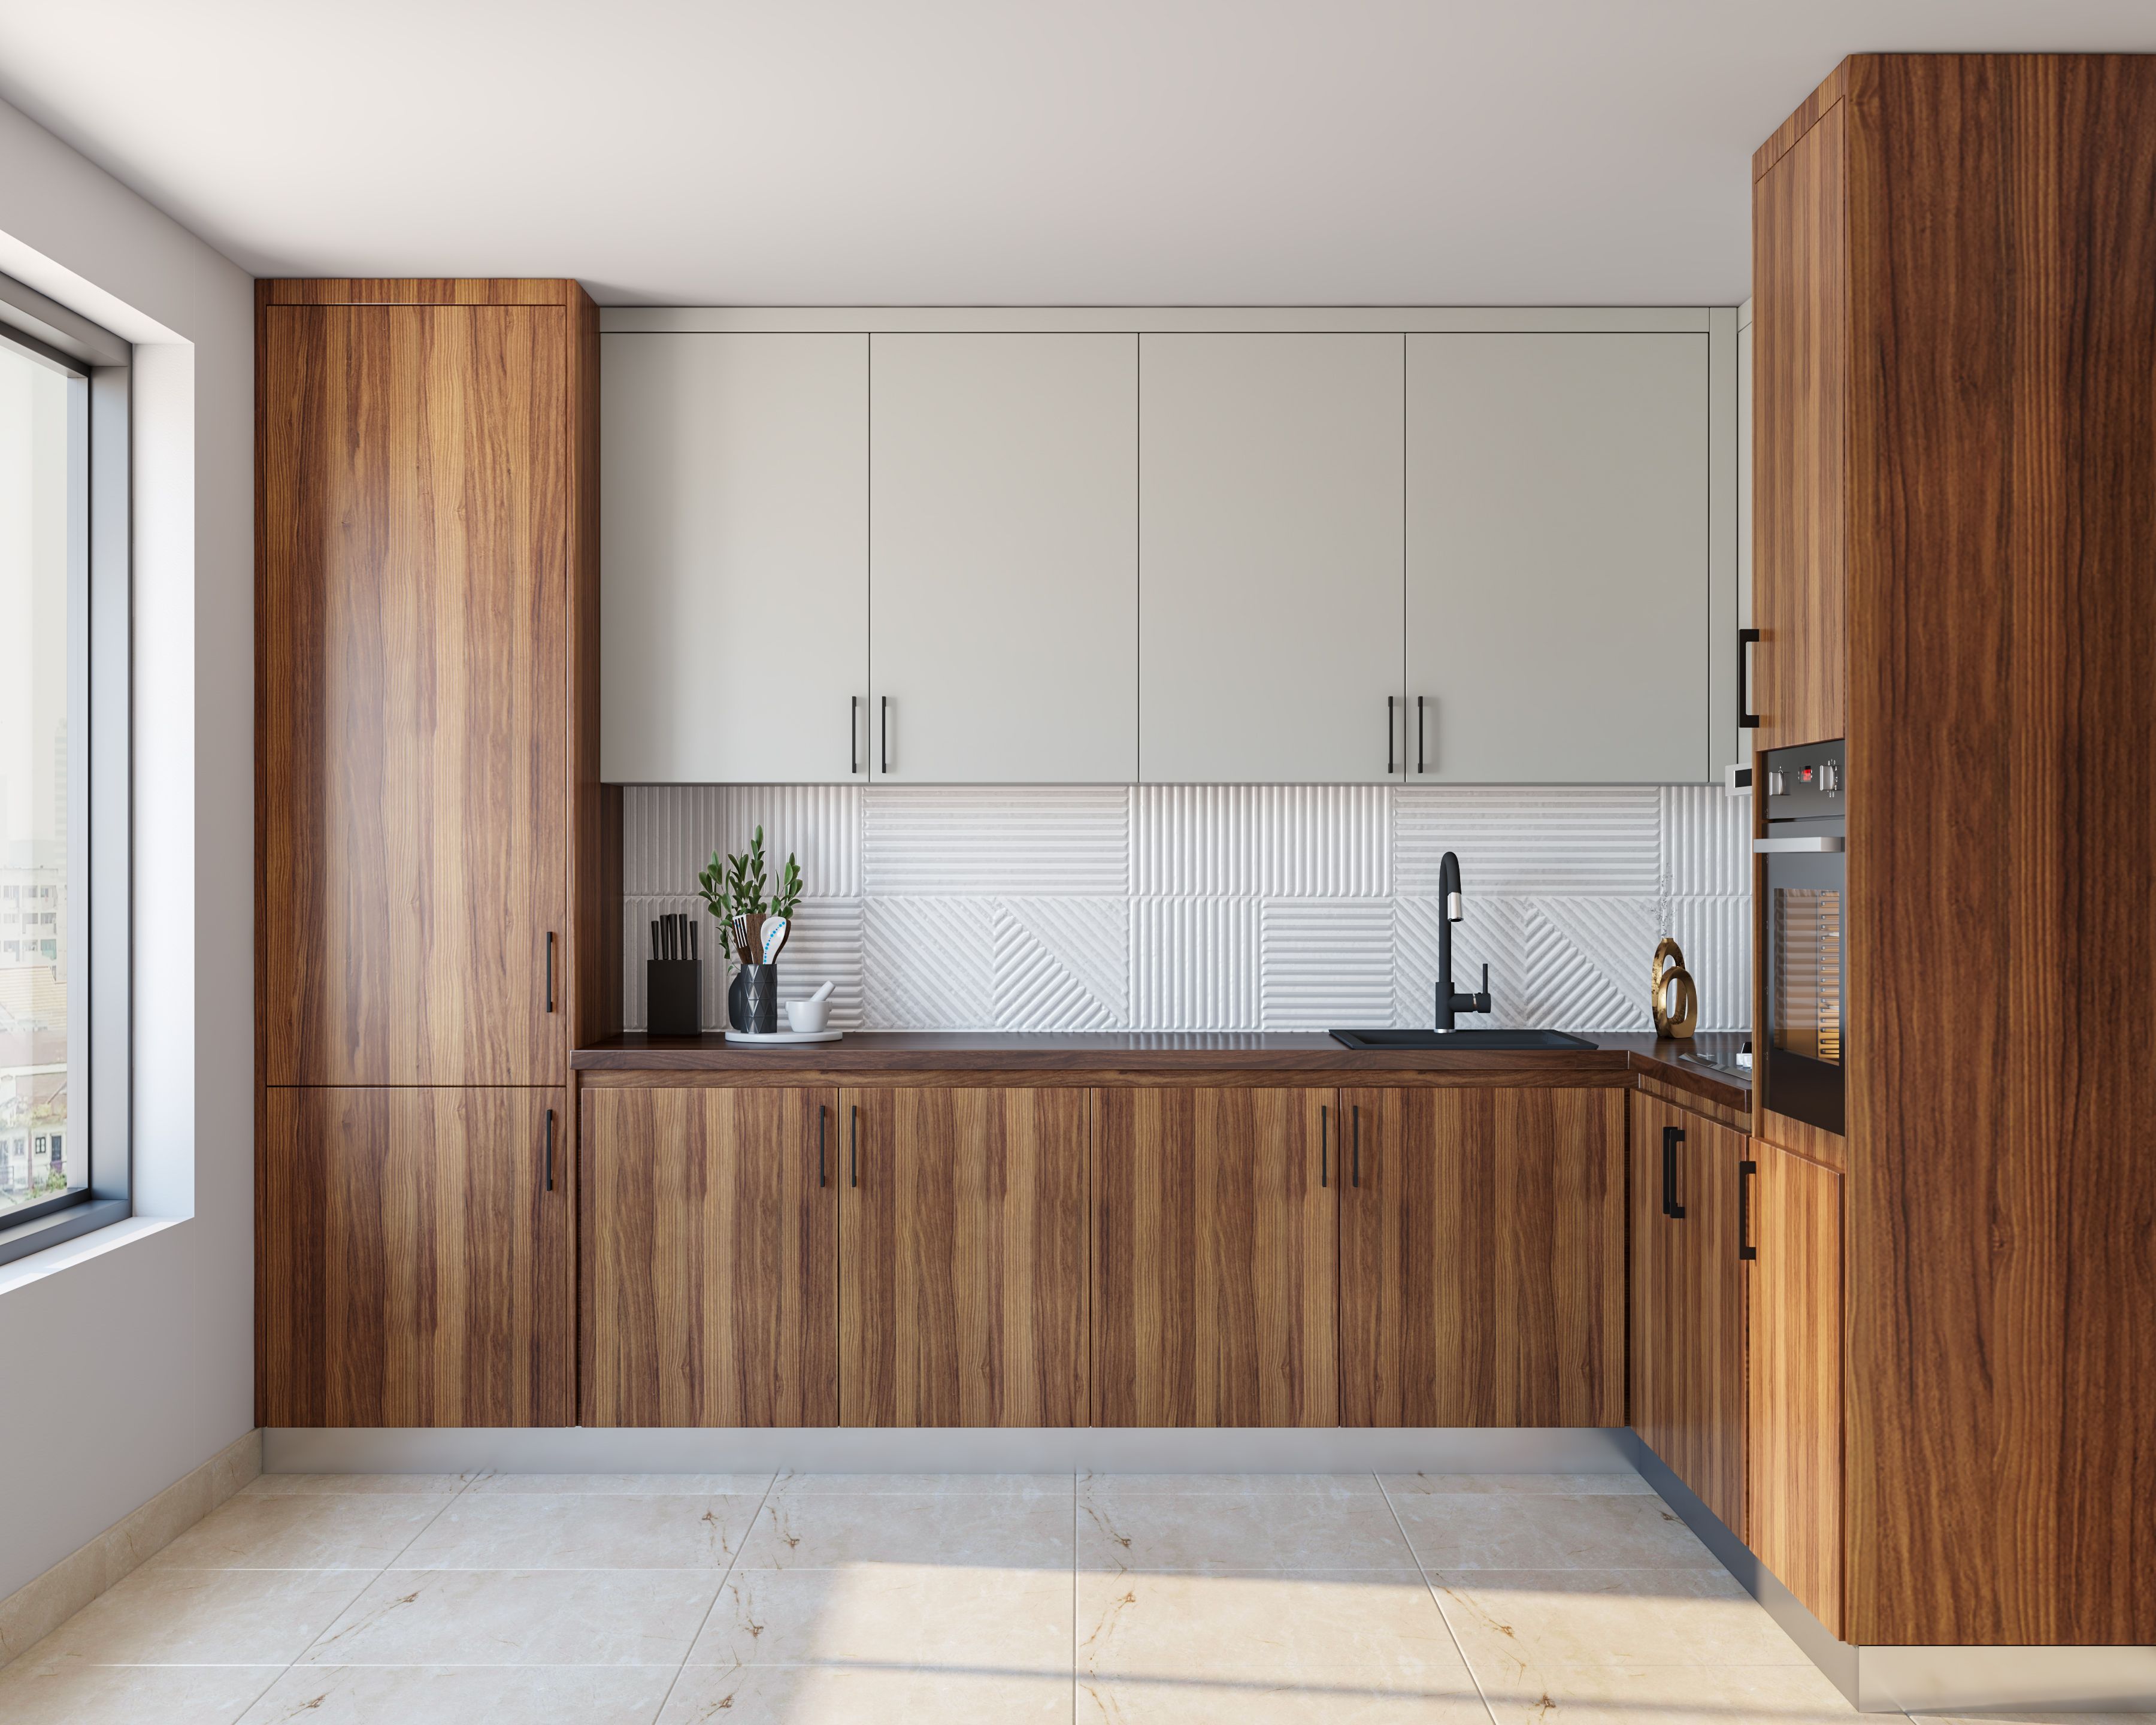 Minimalistic Wood and White Kitchen Design